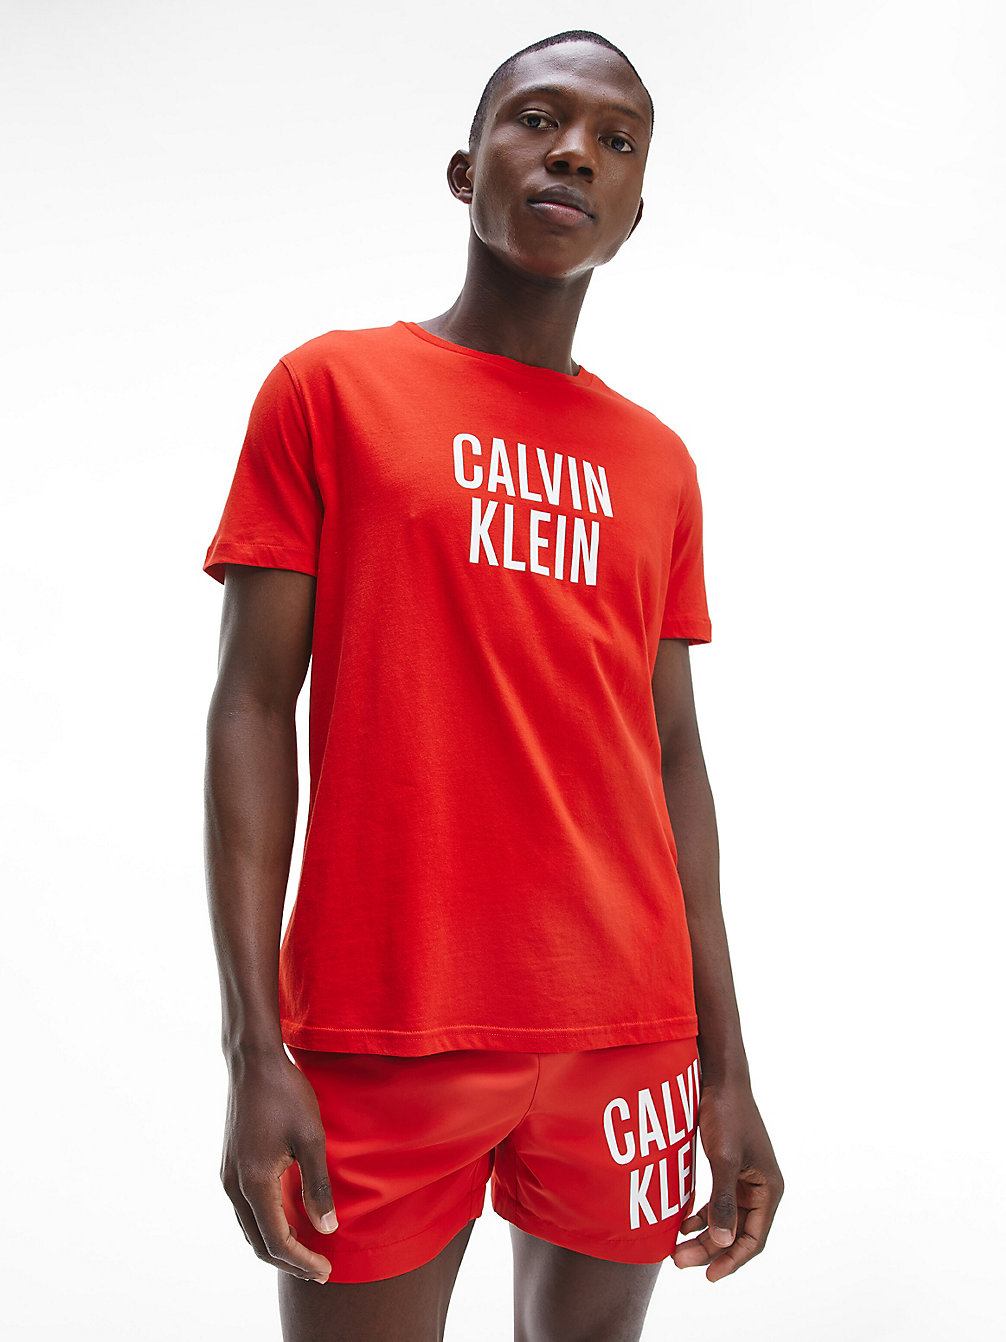 DEEP CRIMSON > Пляжная футболка из органического хлопка - Intense Power > undefined женщины - Calvin Klein